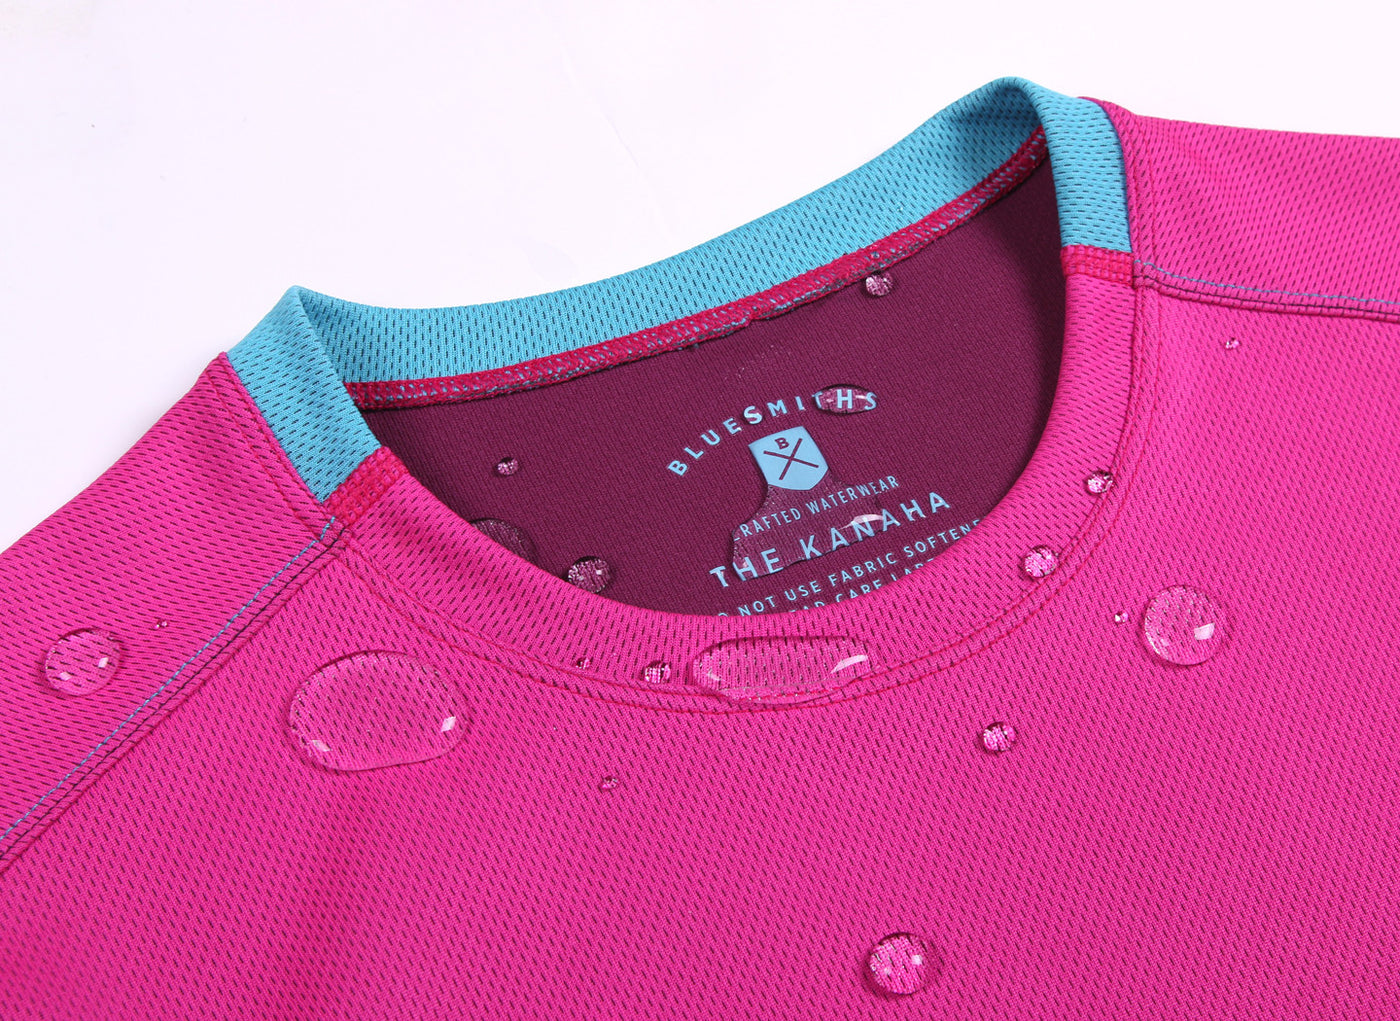 The Kanaha Hydrophobic Shirt for Women - The World's Finest Waterwear | BLUESMITHS